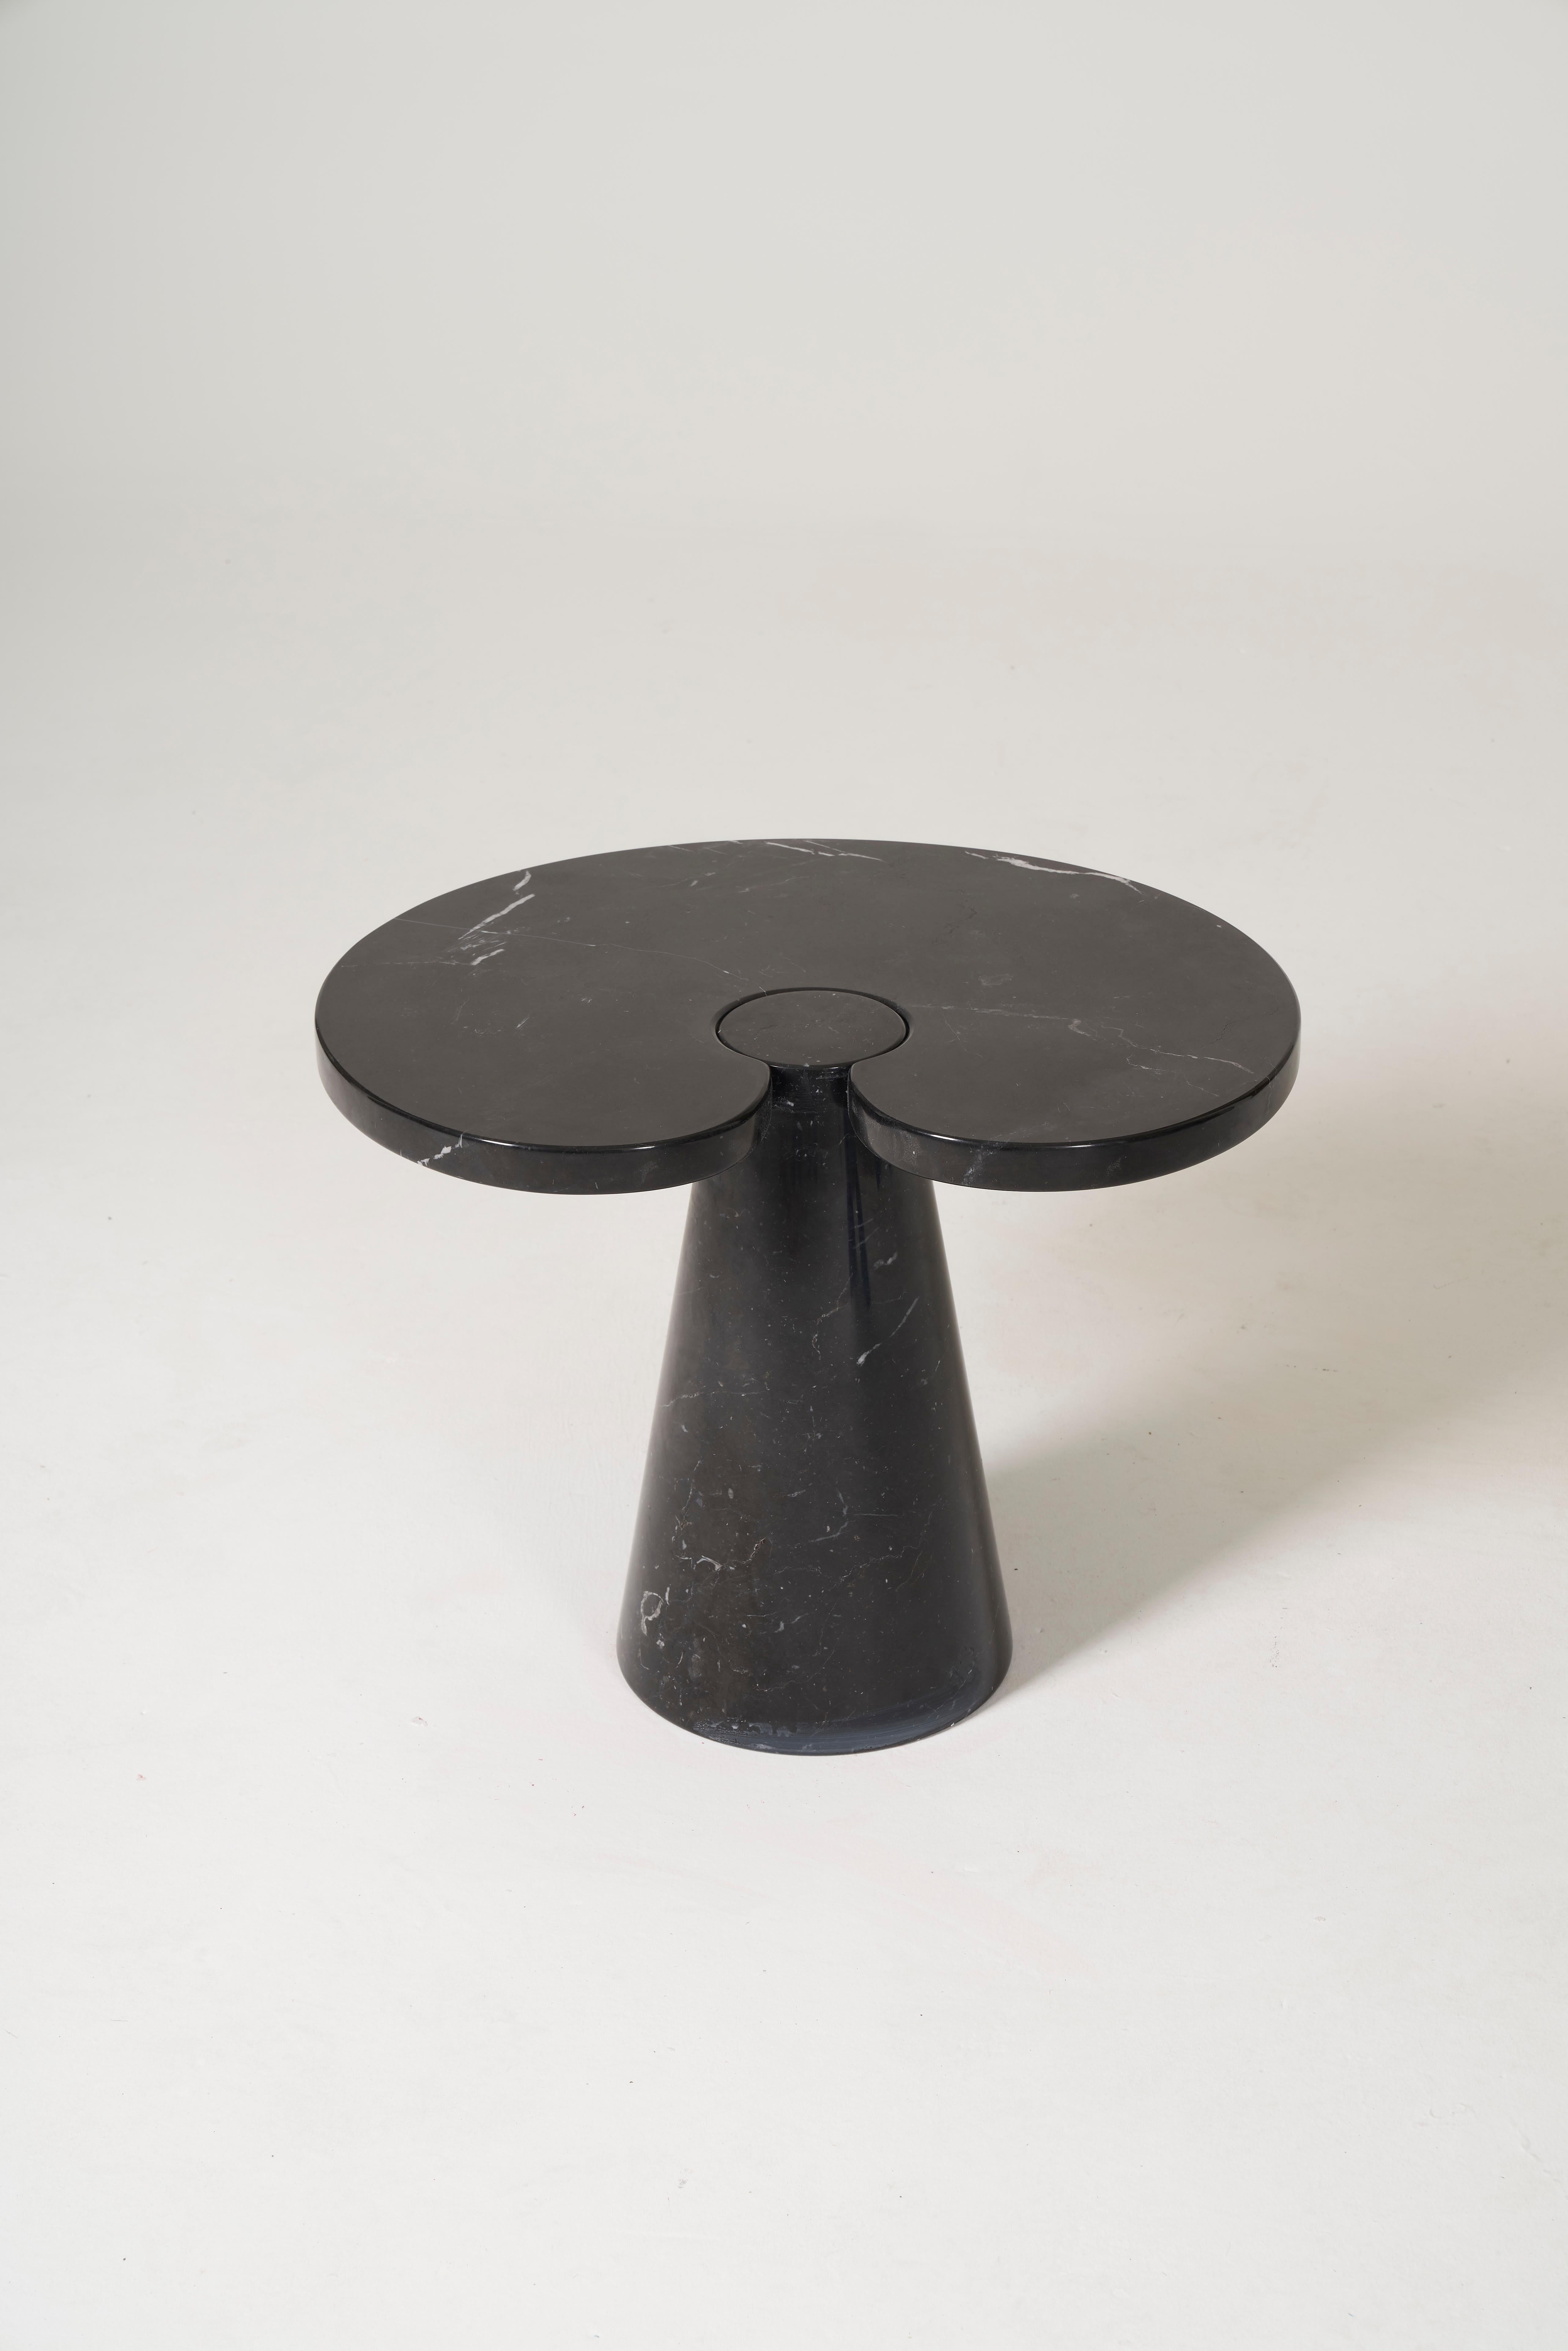 Italian Eros side table, Angelo Mangiarotti, 1971